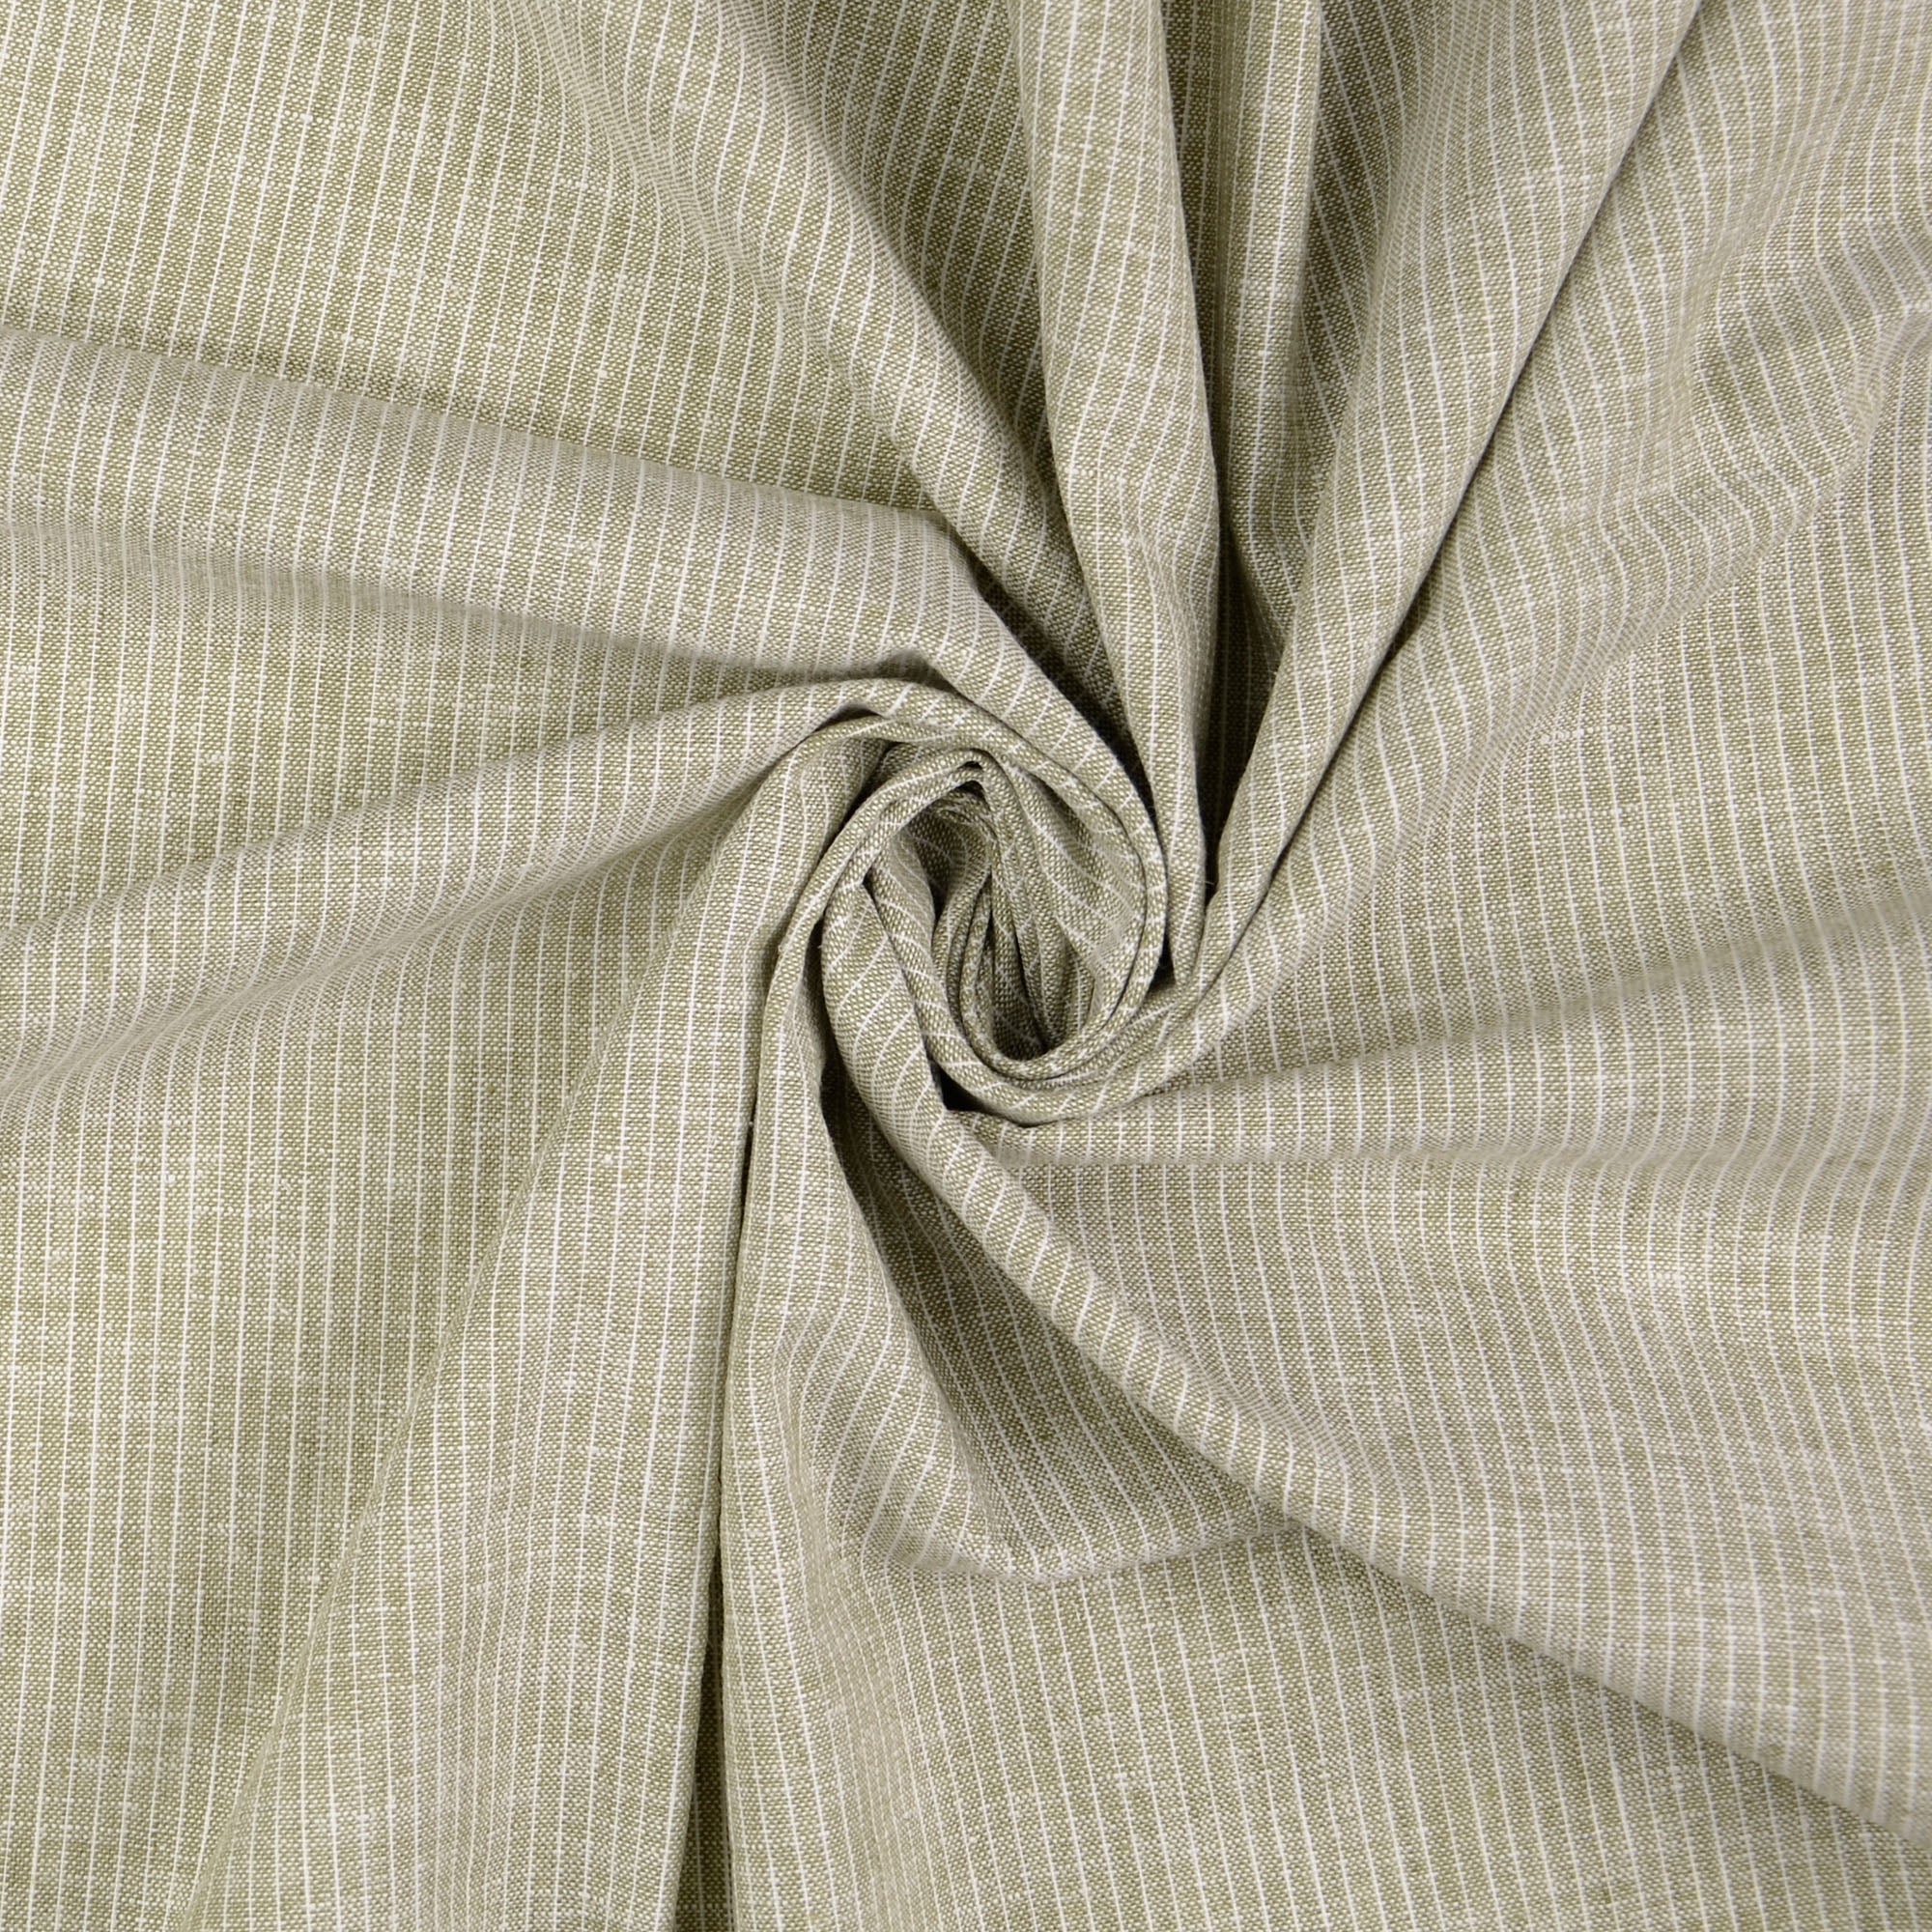 Fine Stripe Beige Linen Cotton Fabric